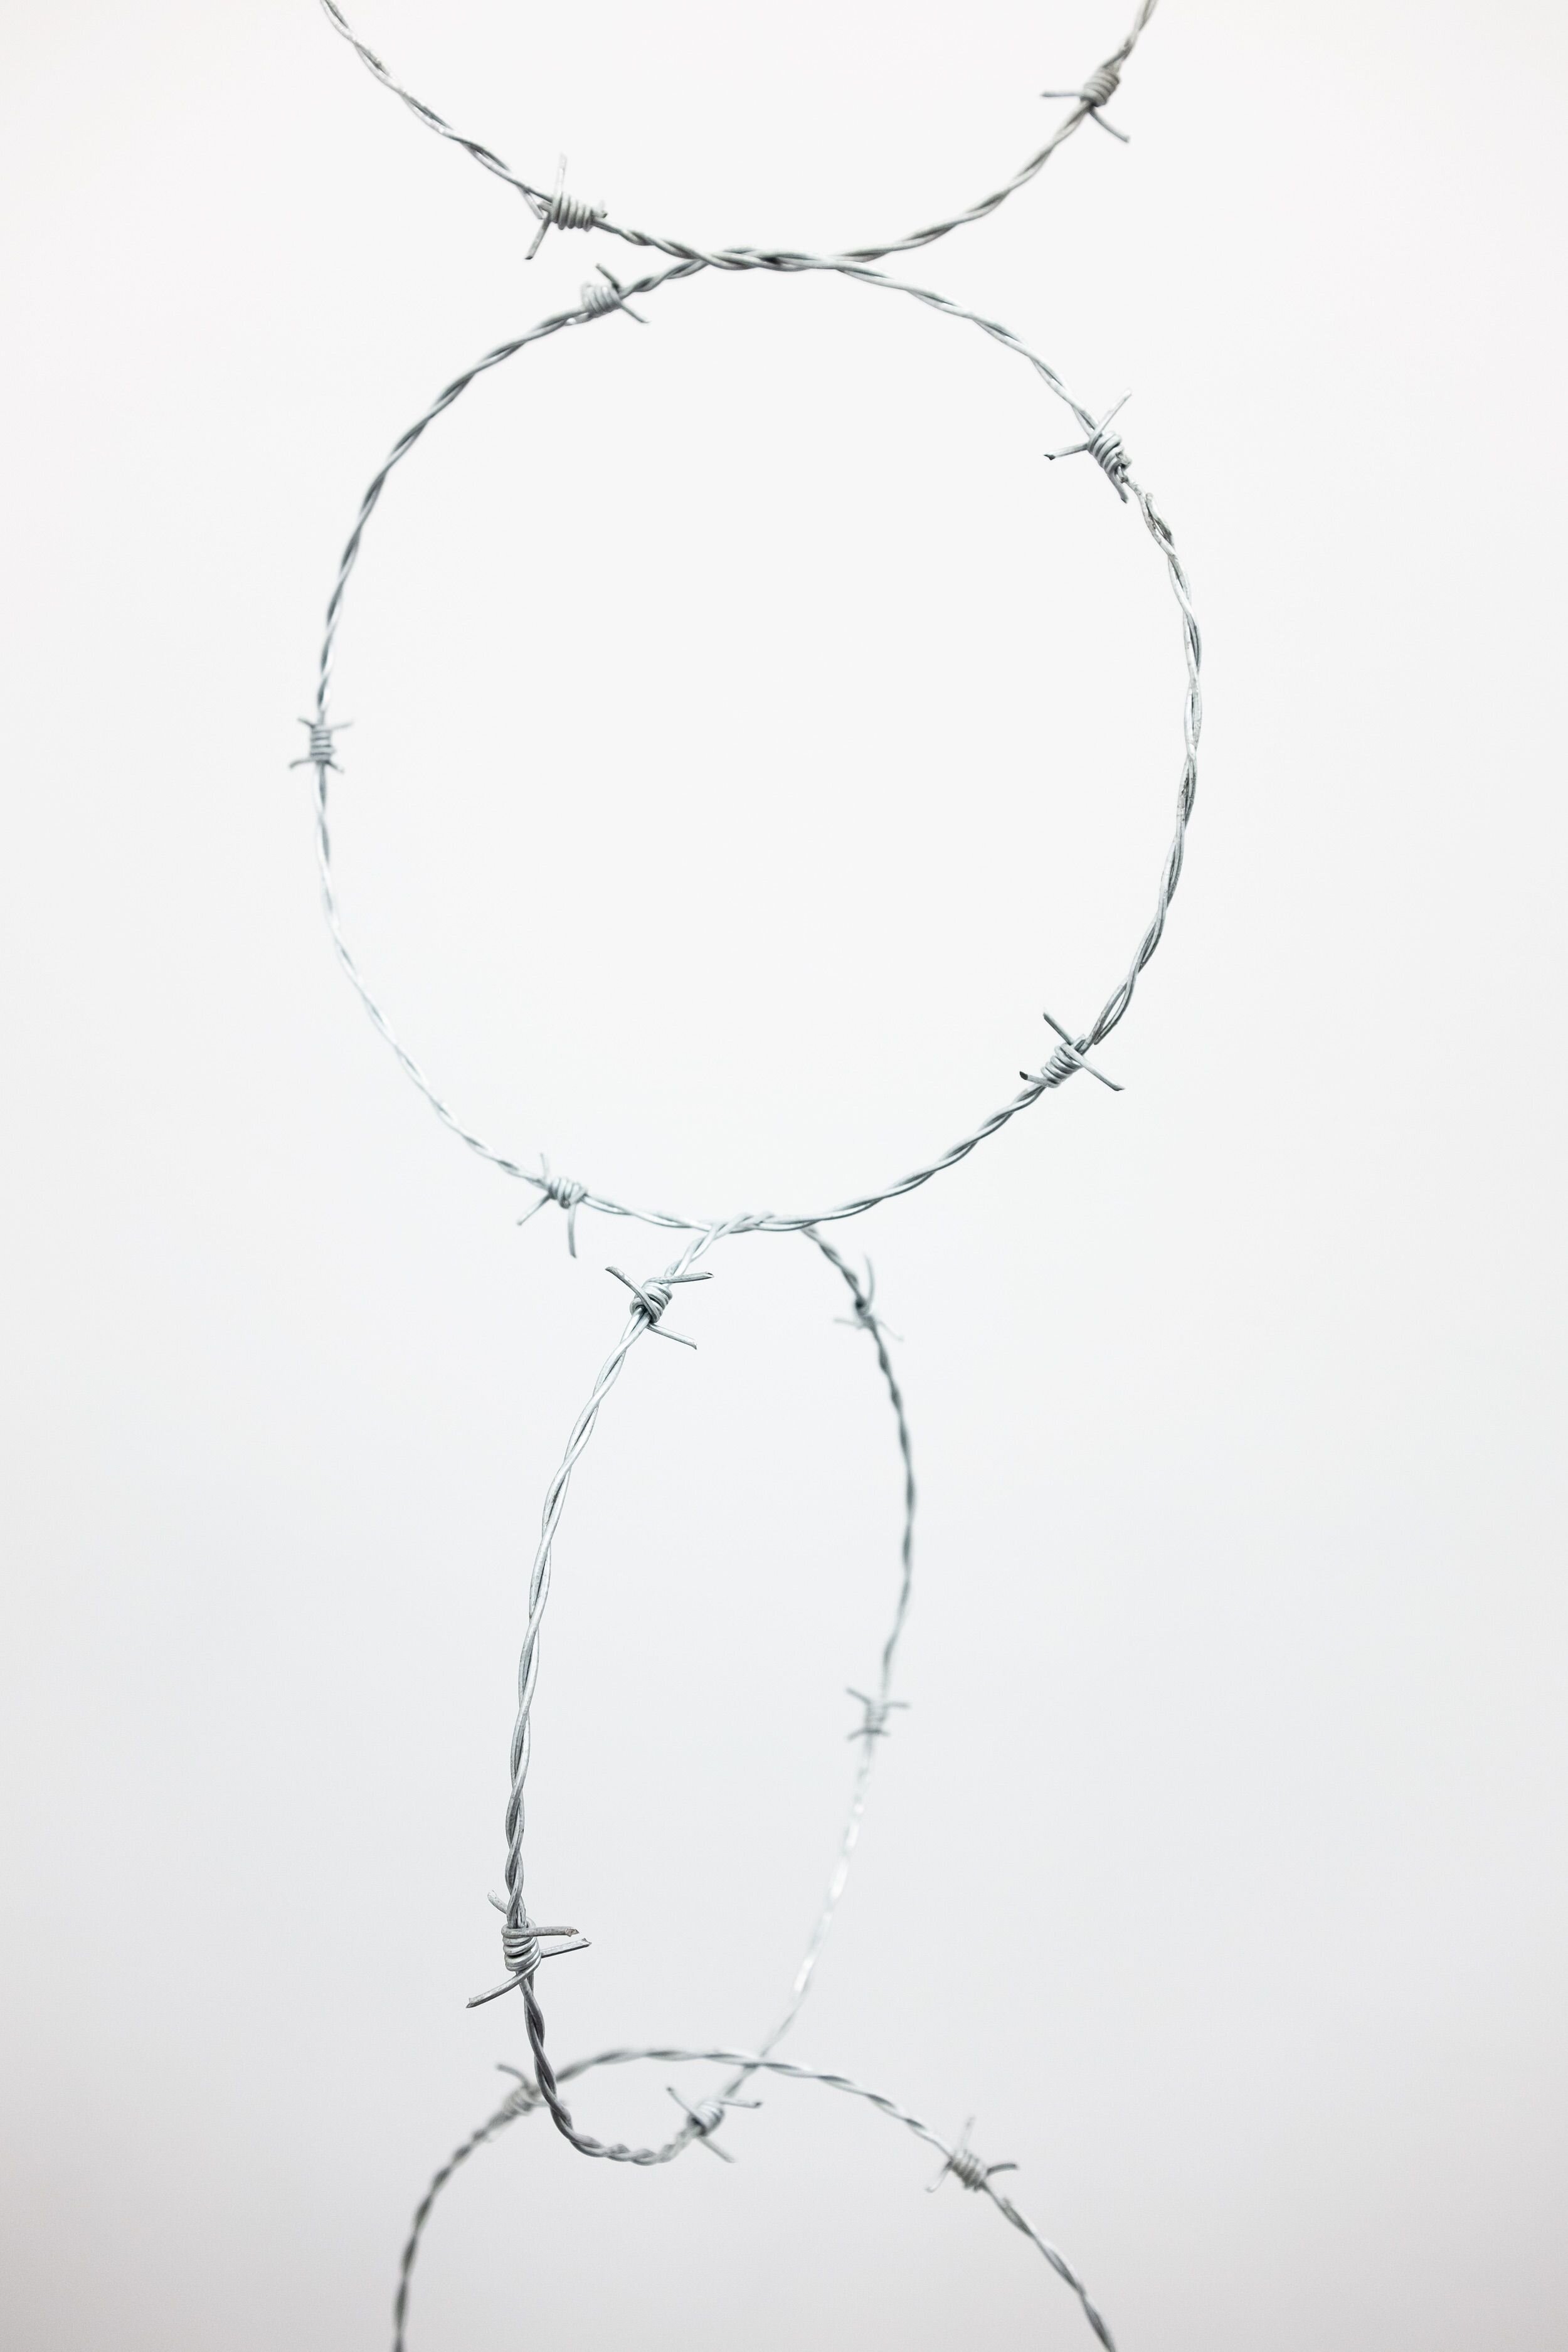 Hugo Montoya, 'Devil's Rope' 2021, wire (detail)